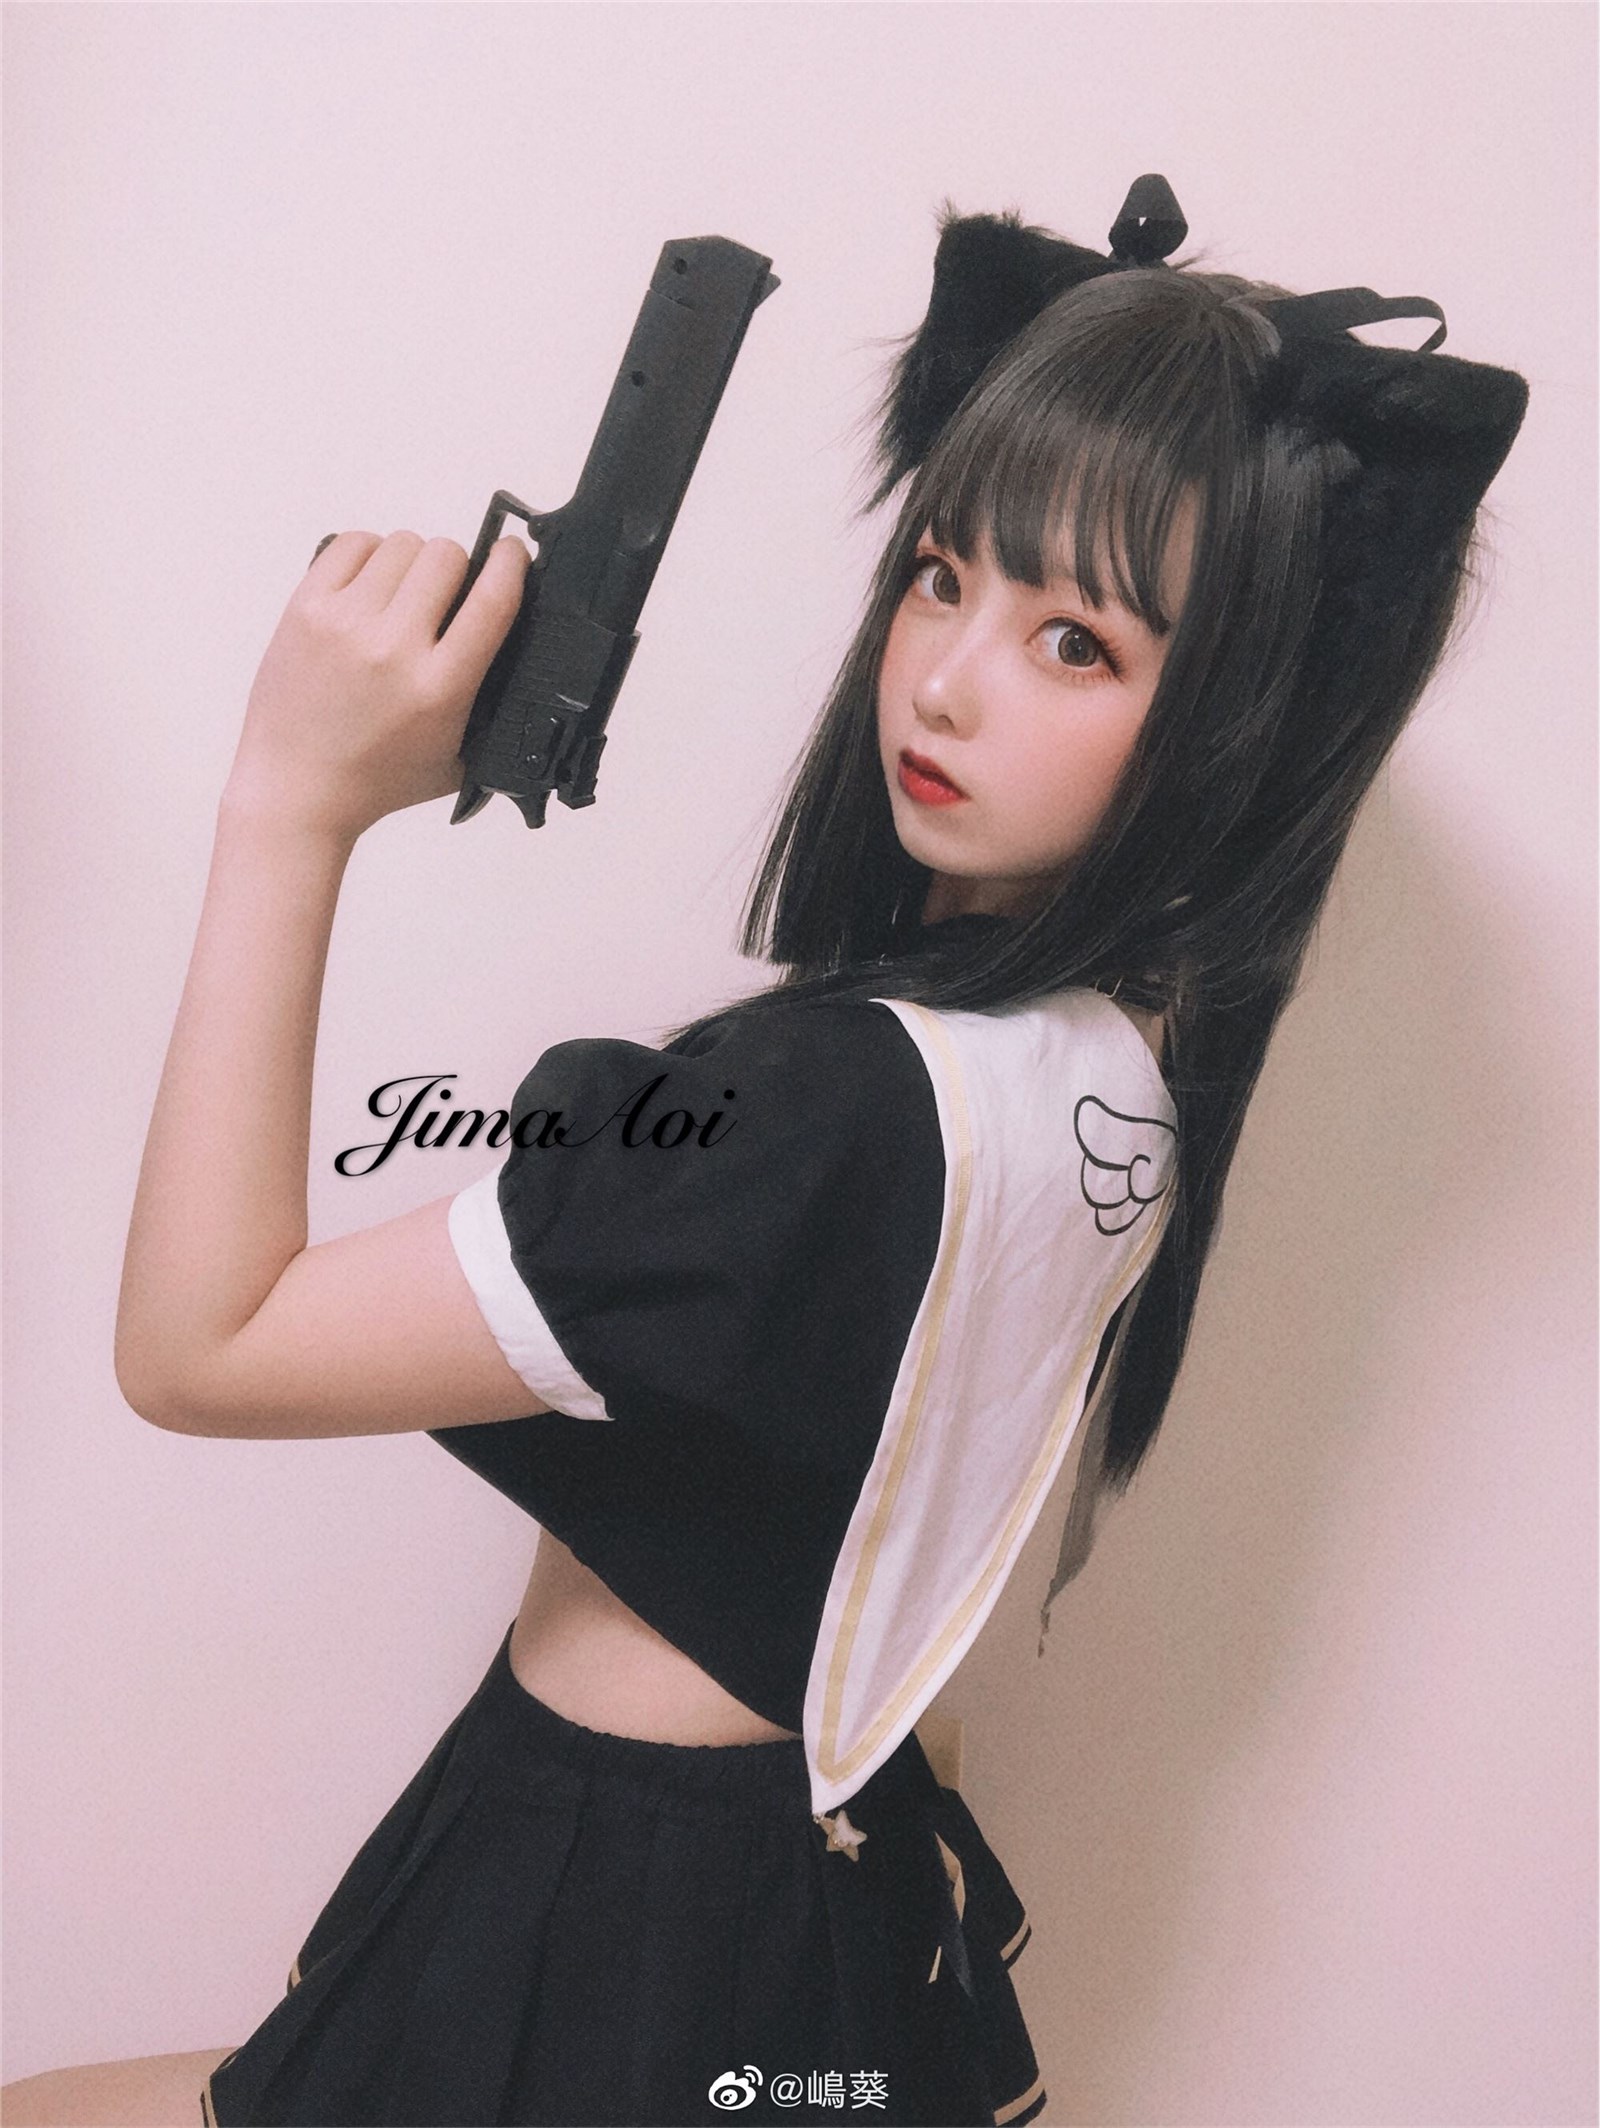 Kwai - vol.015 black cat with gun(6)